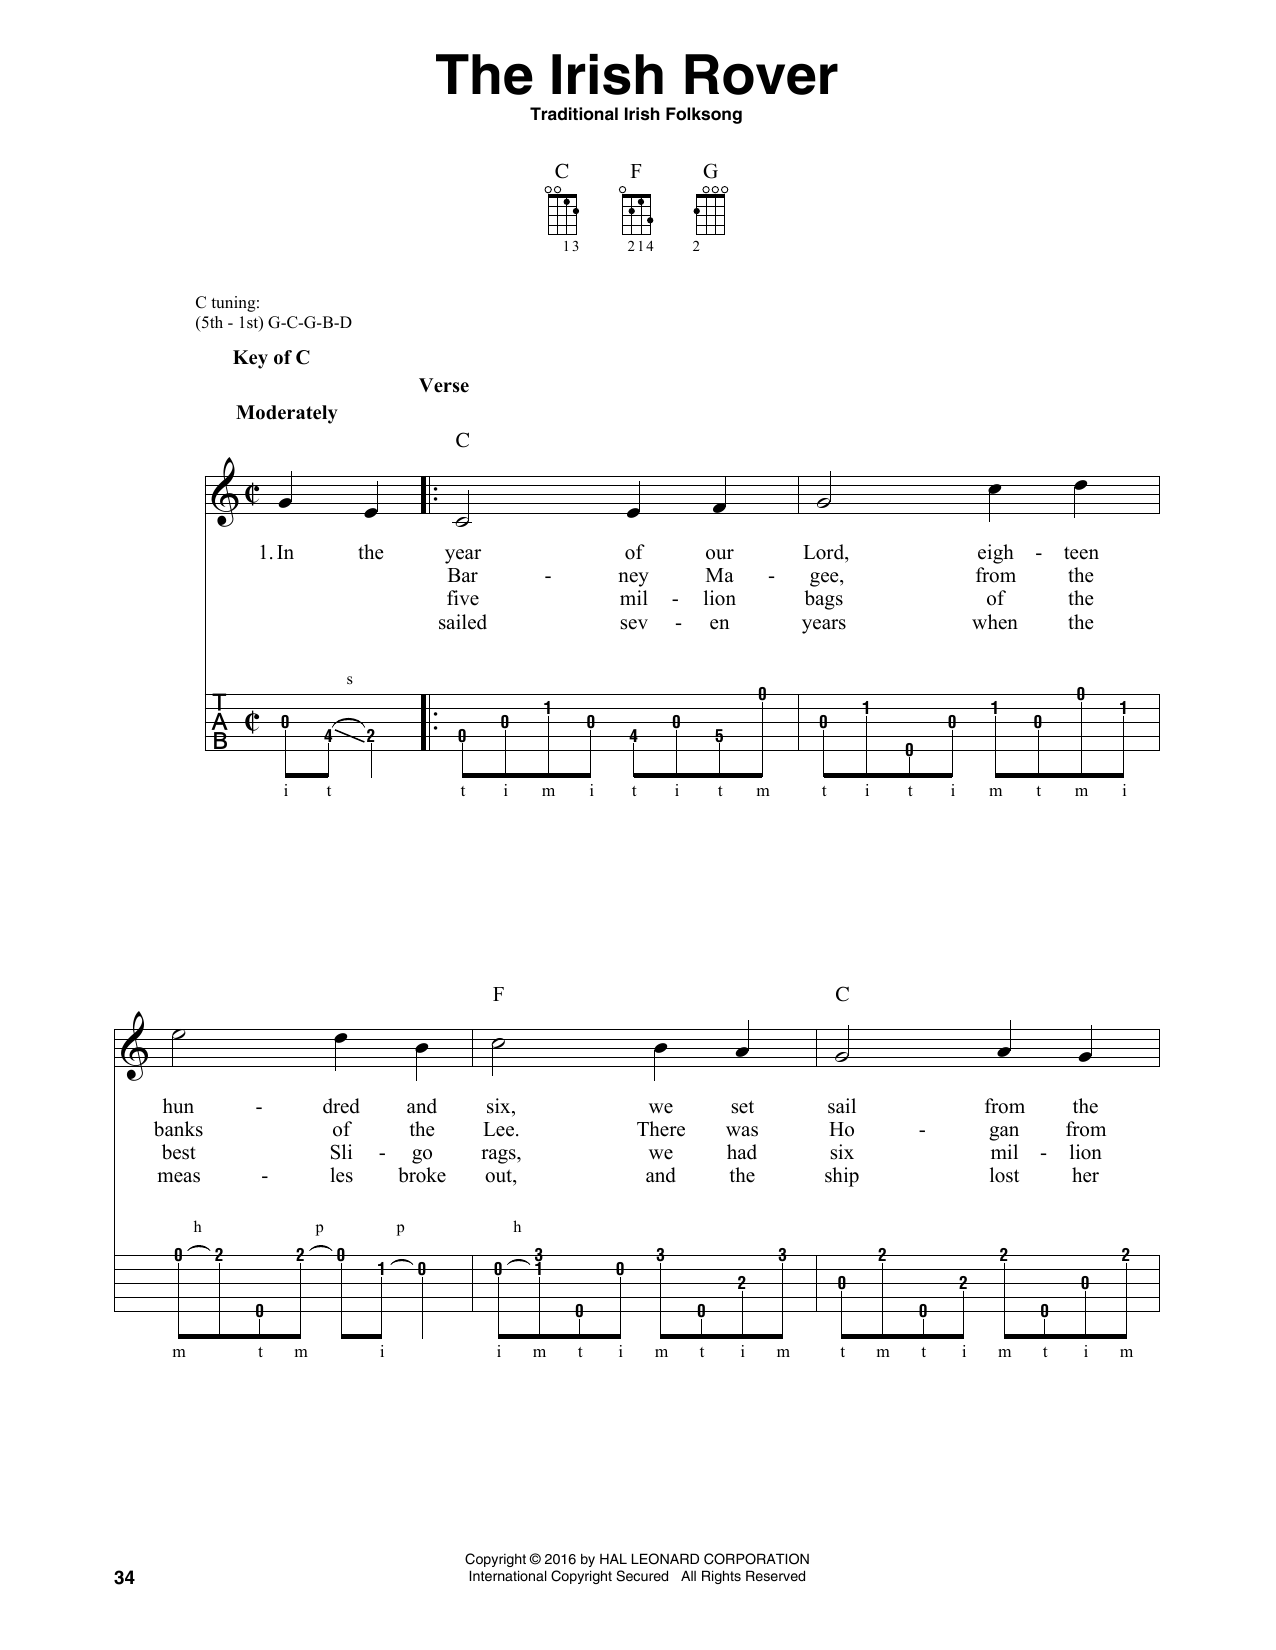 Traditional Irish Folk Song The Irish Rover Sheet Music Notes & Chords for Ukulele - Download or Print PDF